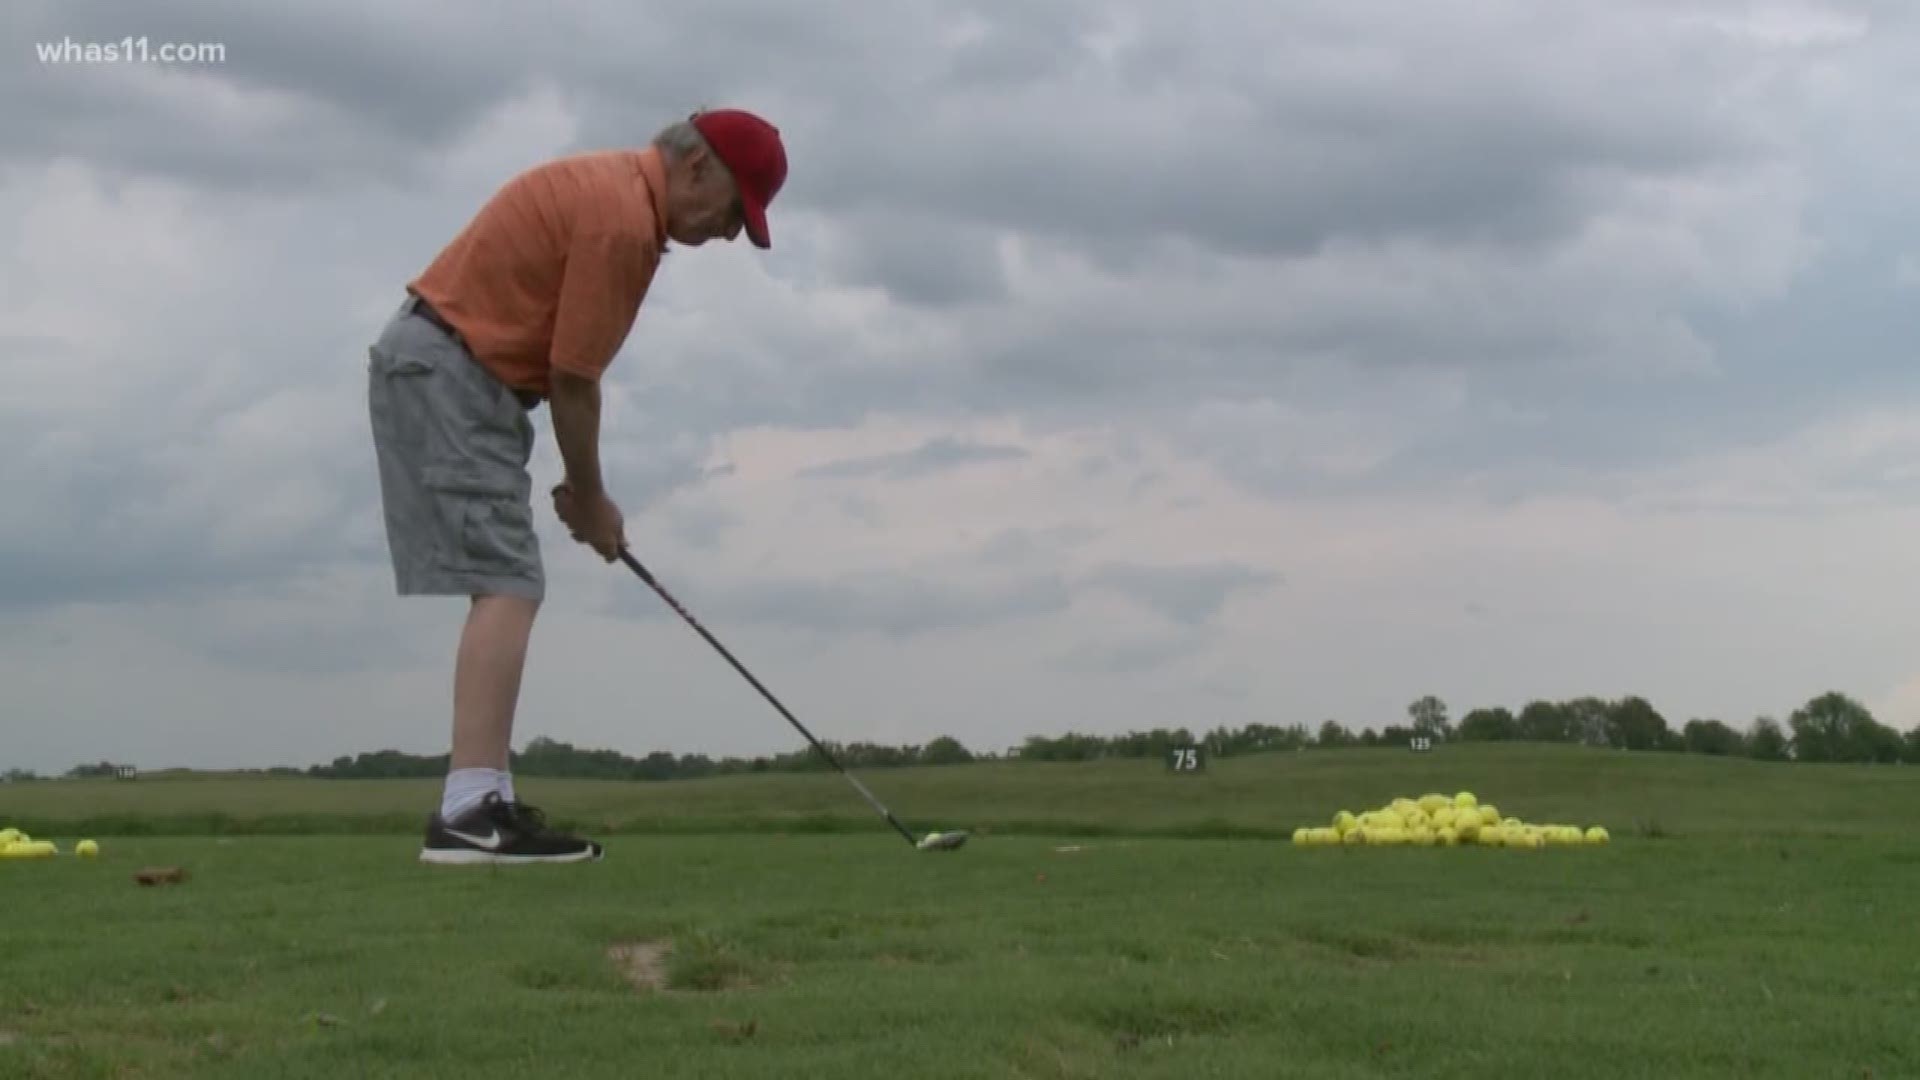 Norton helps Parkinson's patients with golf